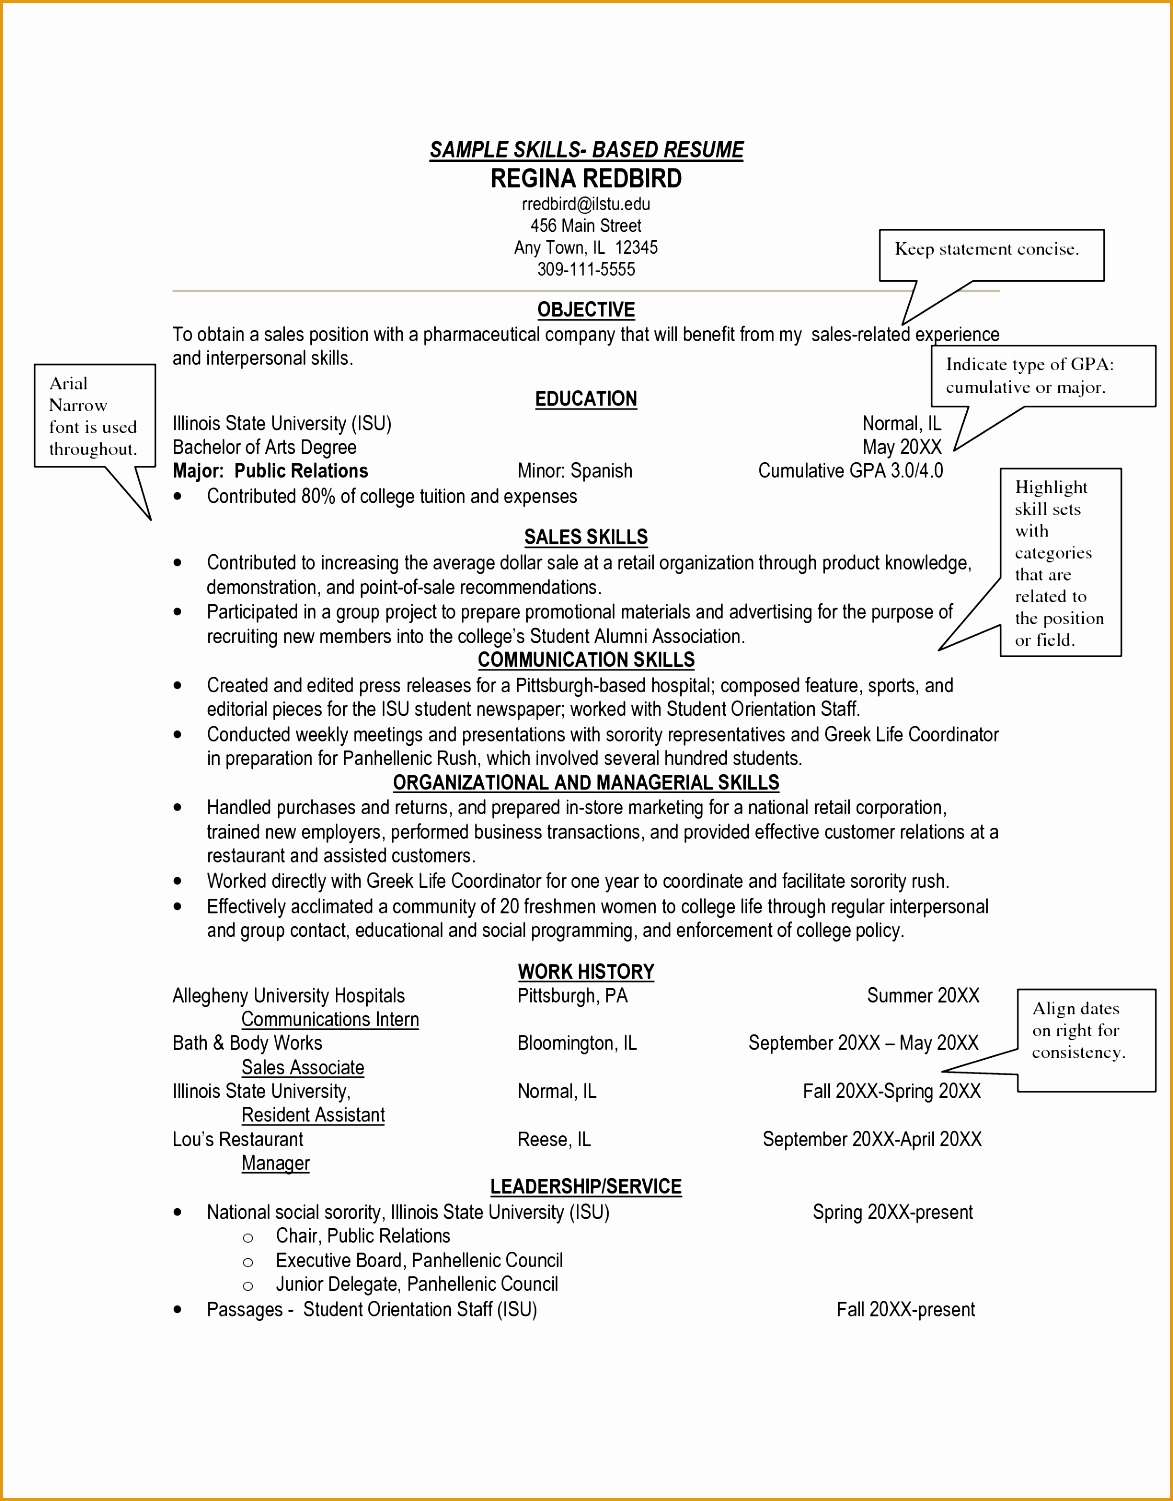 sample resume summary of qualifications15011173